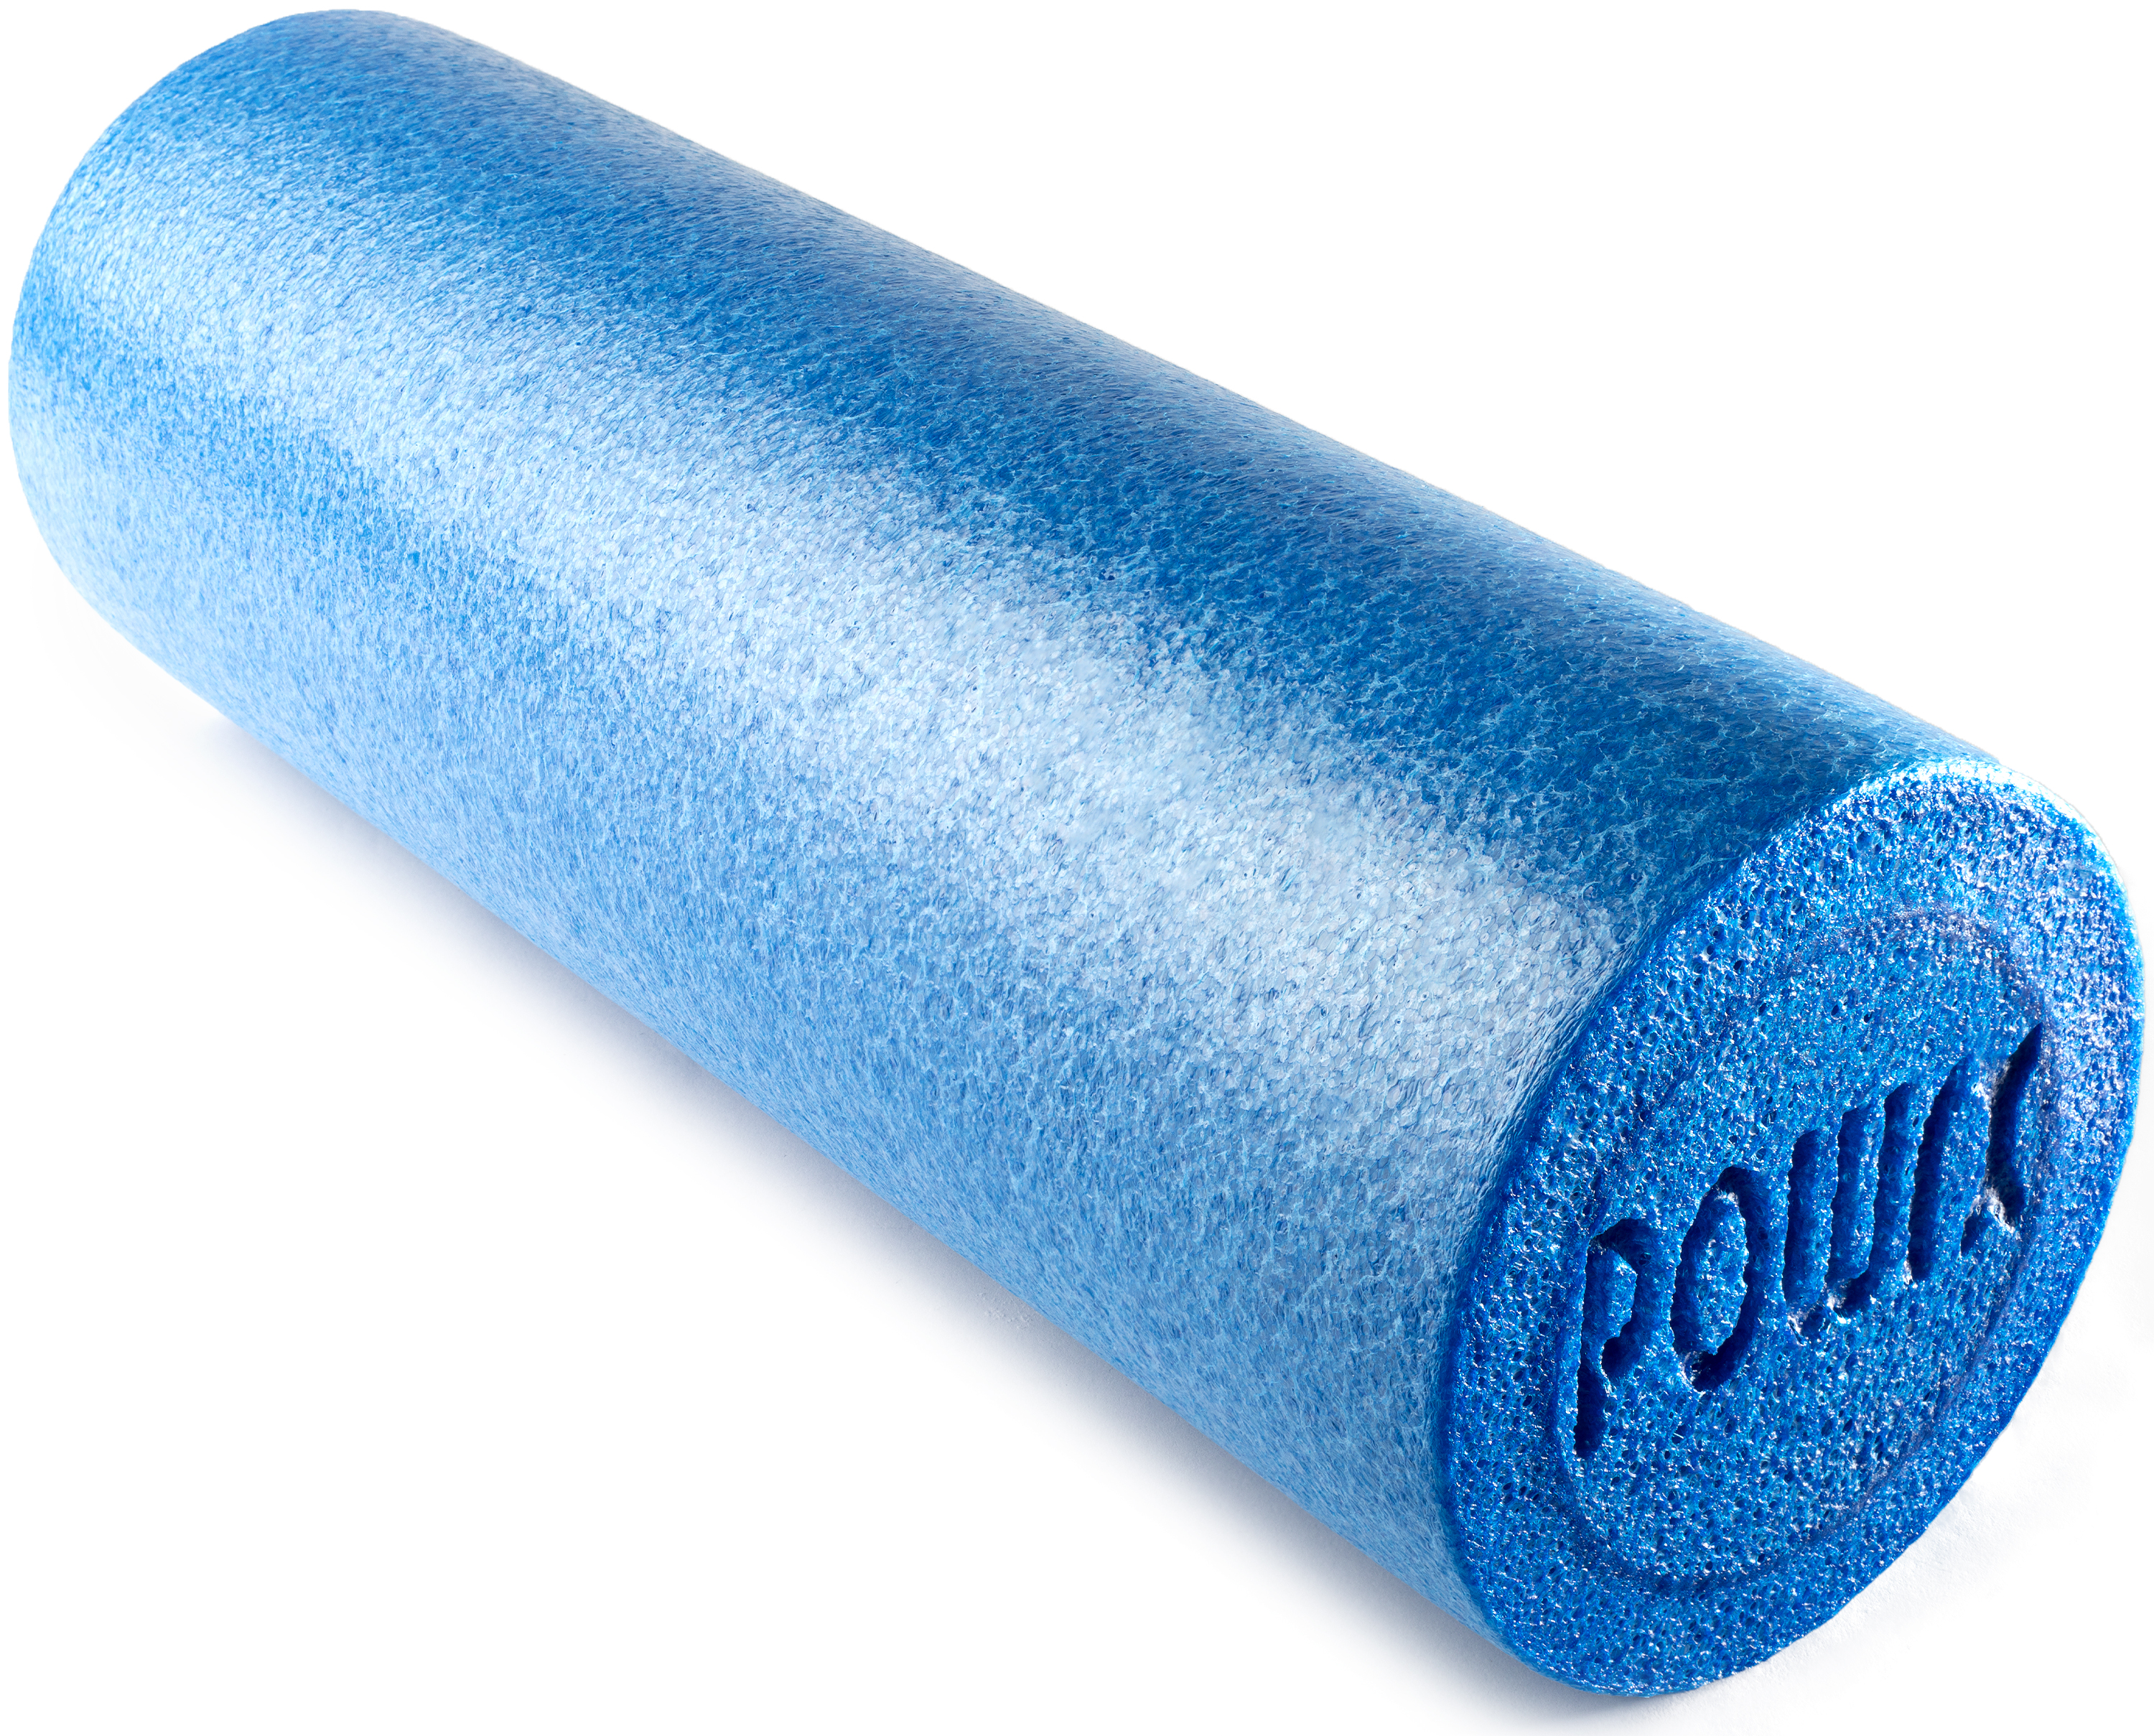 Workout//Pilates-Rolle//Schaumstoff-Rolle//Foam-Roller//Faszien-Training//Selbstmassagerolle 45 cm oder 90 cm x 15 cm Blau Lila Pink POWRX Yoga-Rolle inkl